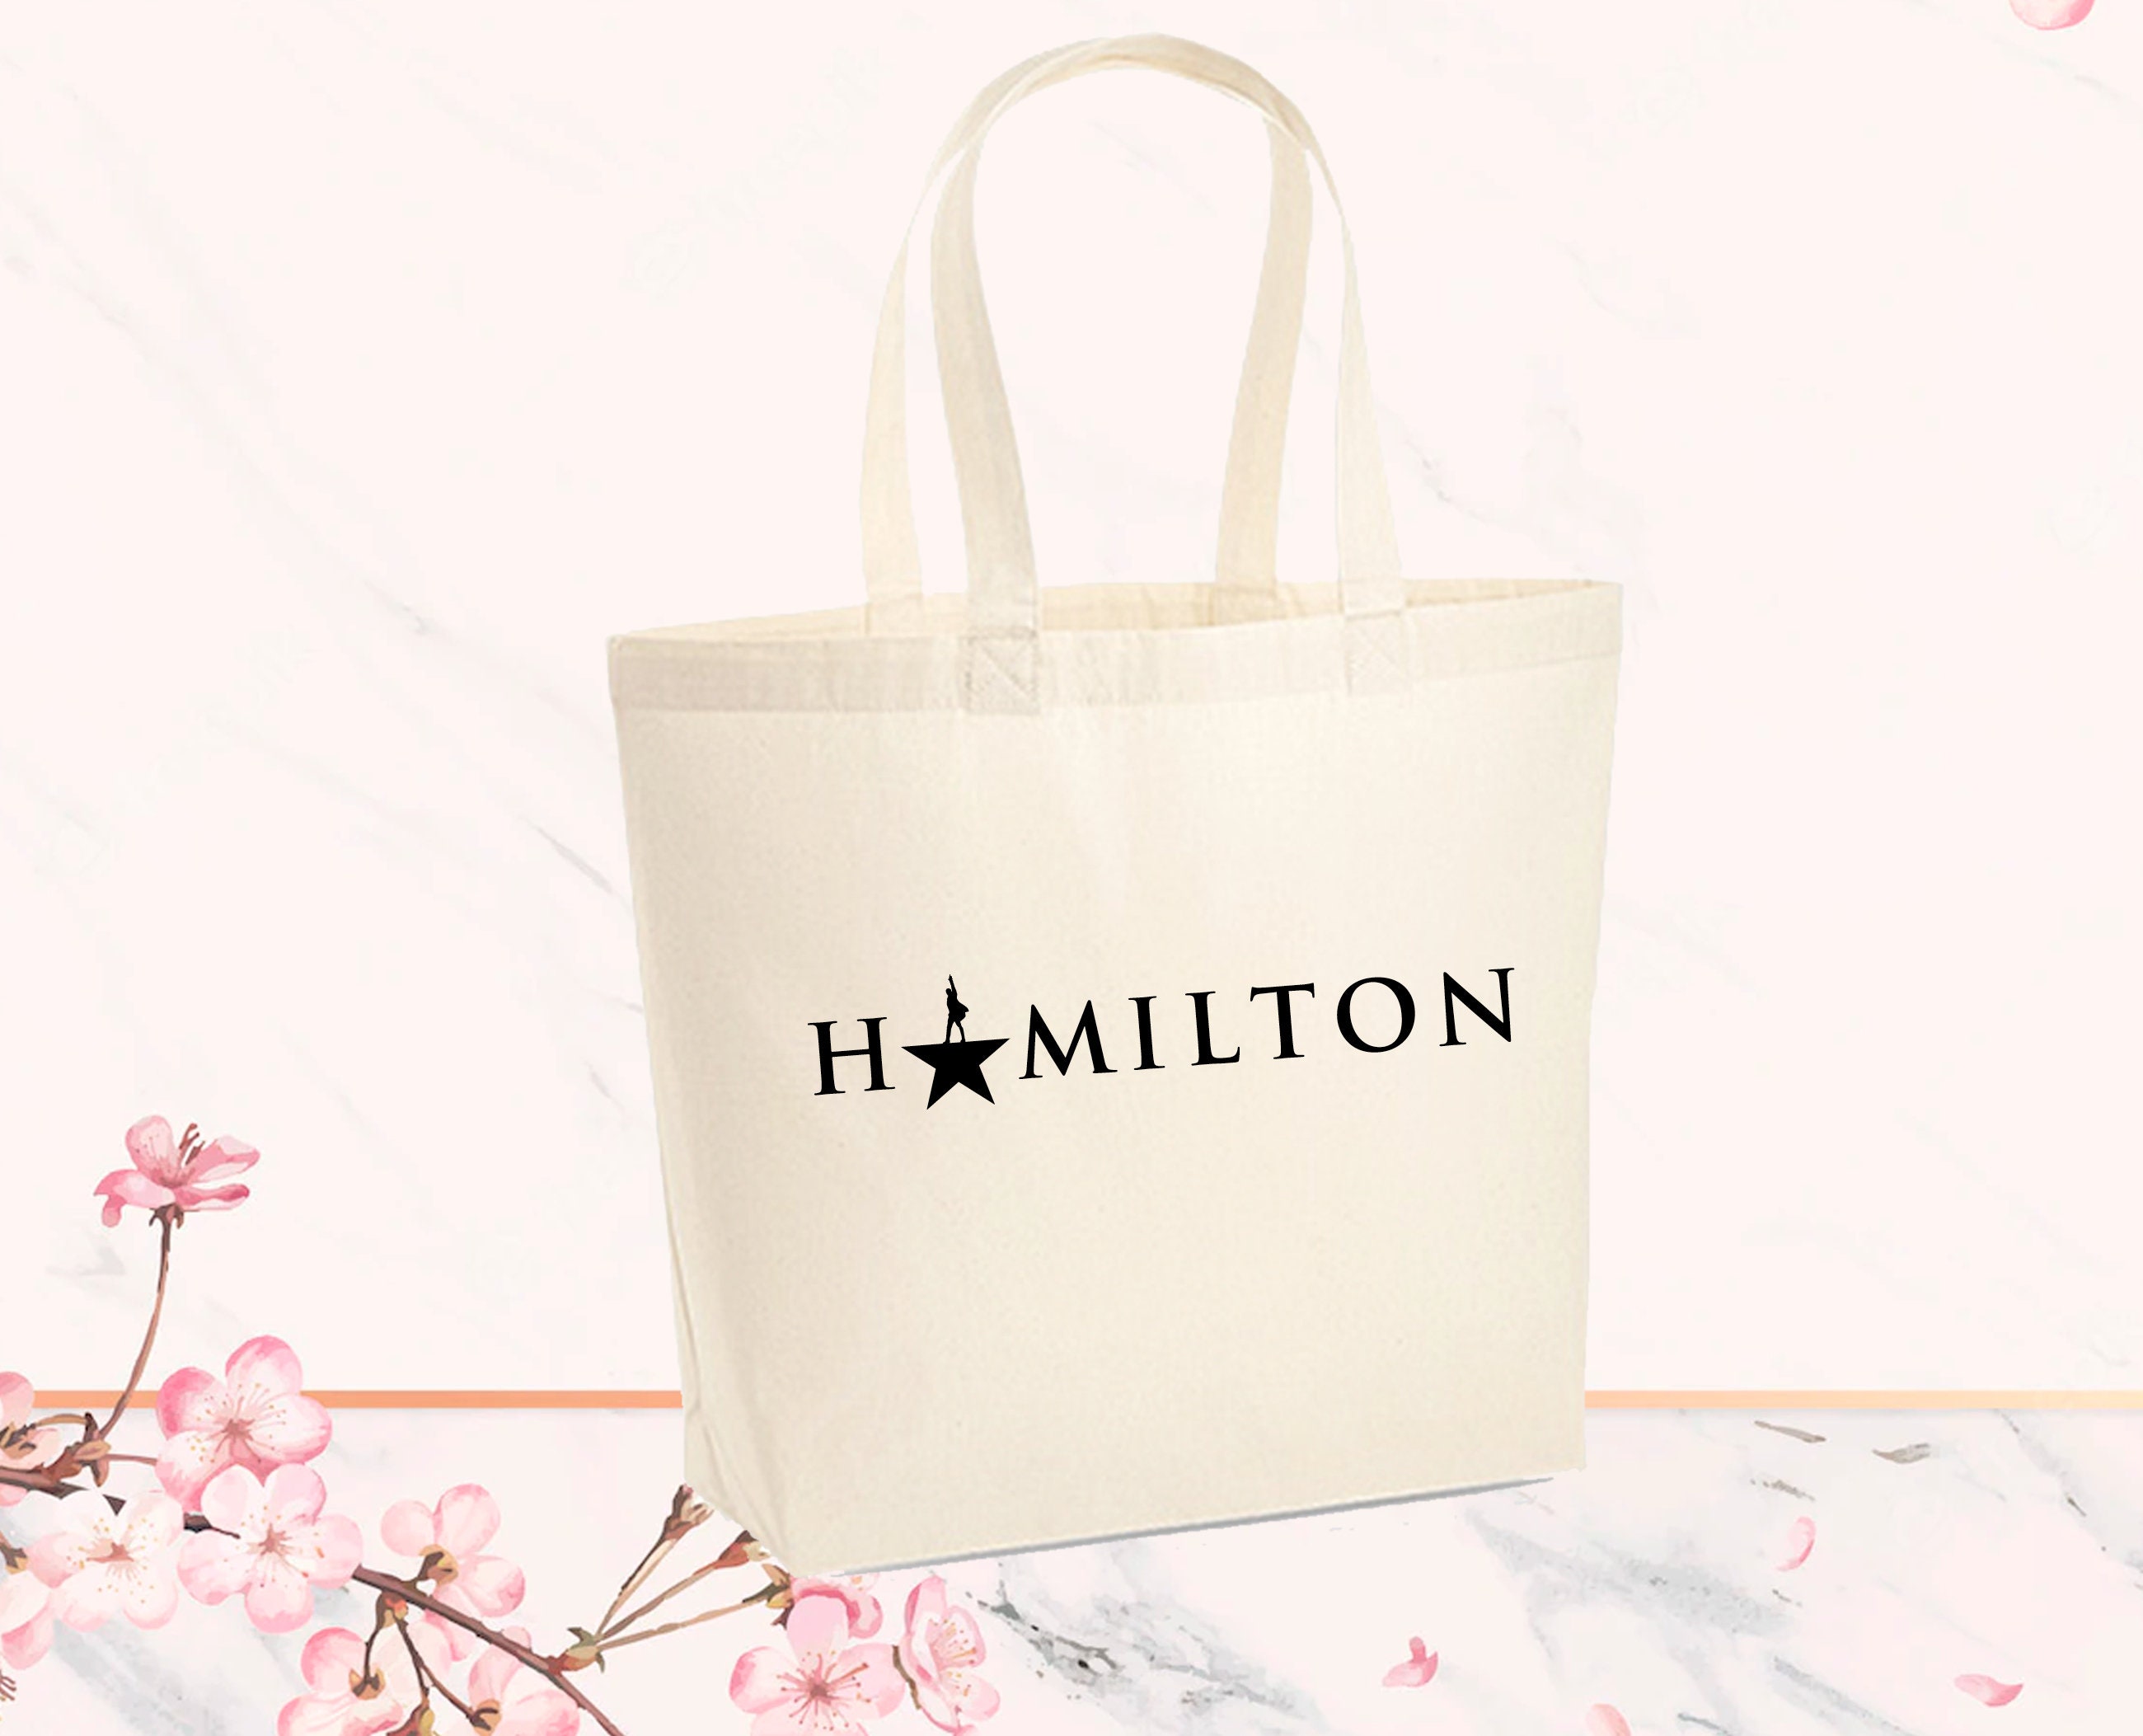 Hamilton Tote Bag, Hamilton Musical, Hamilton Jute Bag, Alexander Hamilton, Hamilton  Gifts, Hamilton Merch, Hamilton Quote, Hamilton Totes 